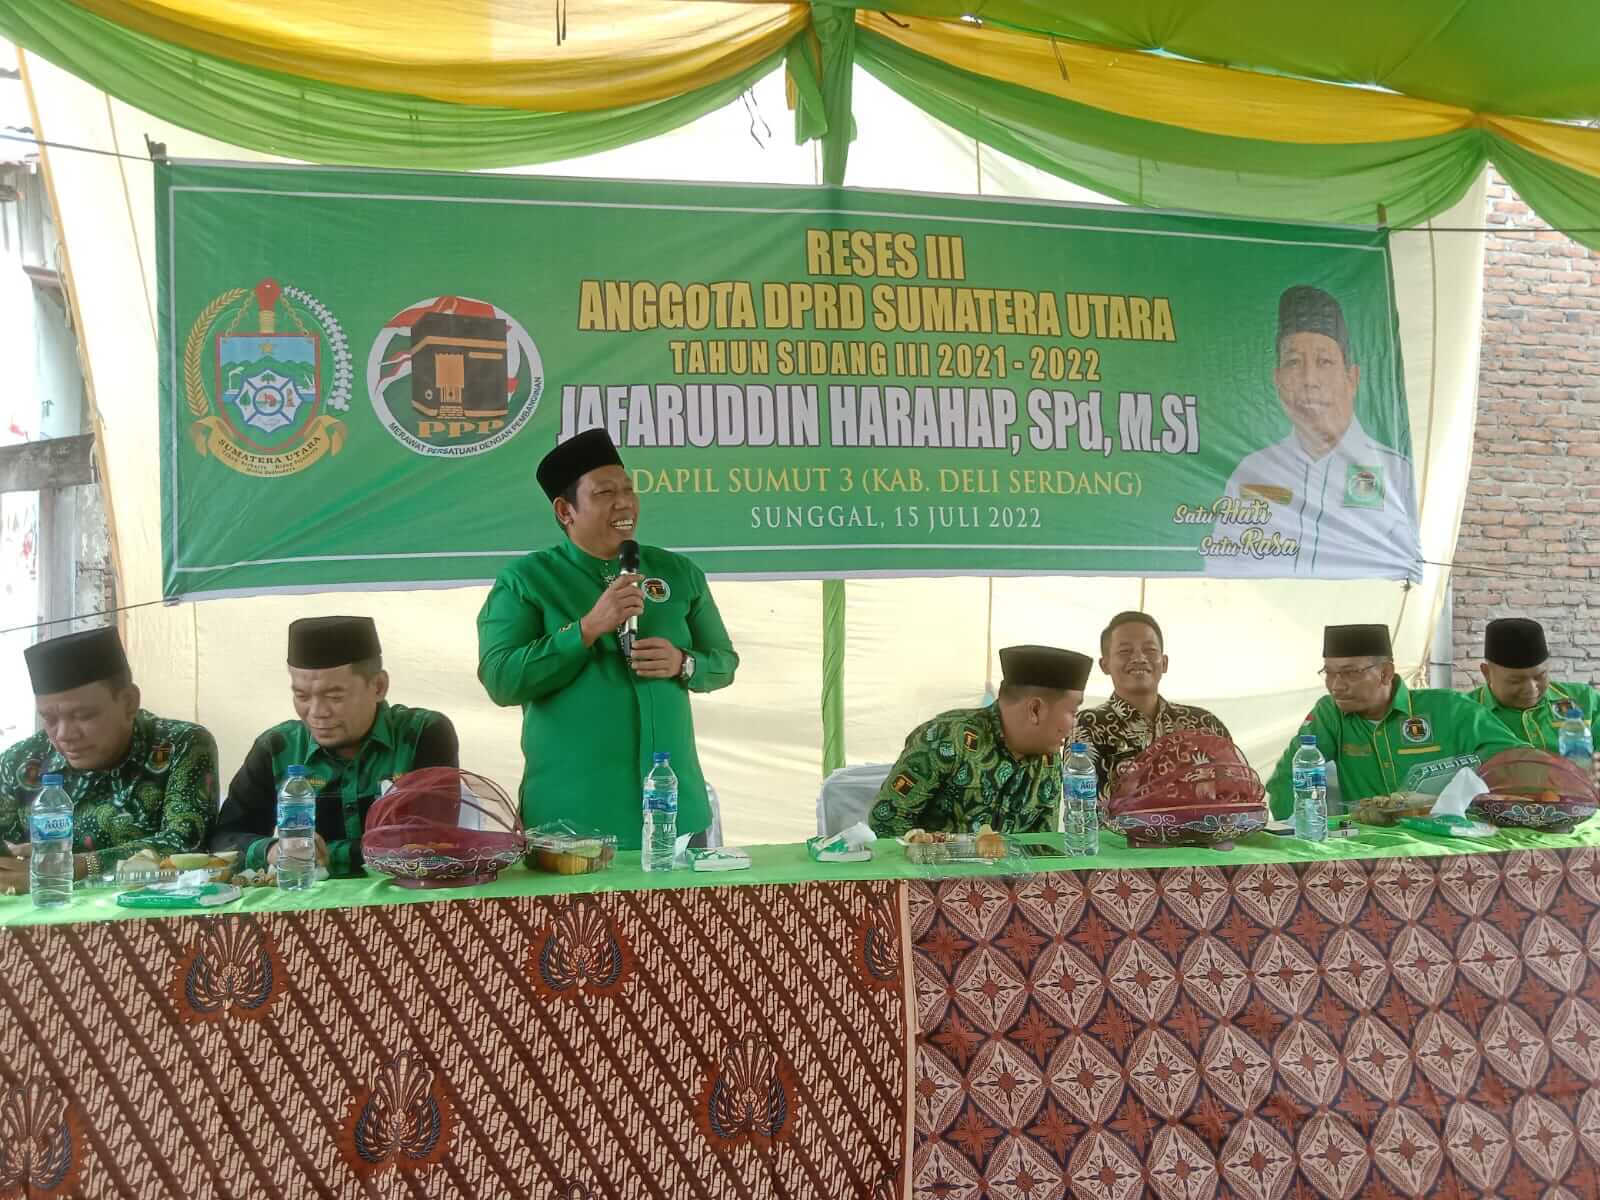 Reses III Tahun Sidang 2021- 2022, Jafaruddin Harahap Tampung Aspirasi Masyarakat Desa Paya Geli